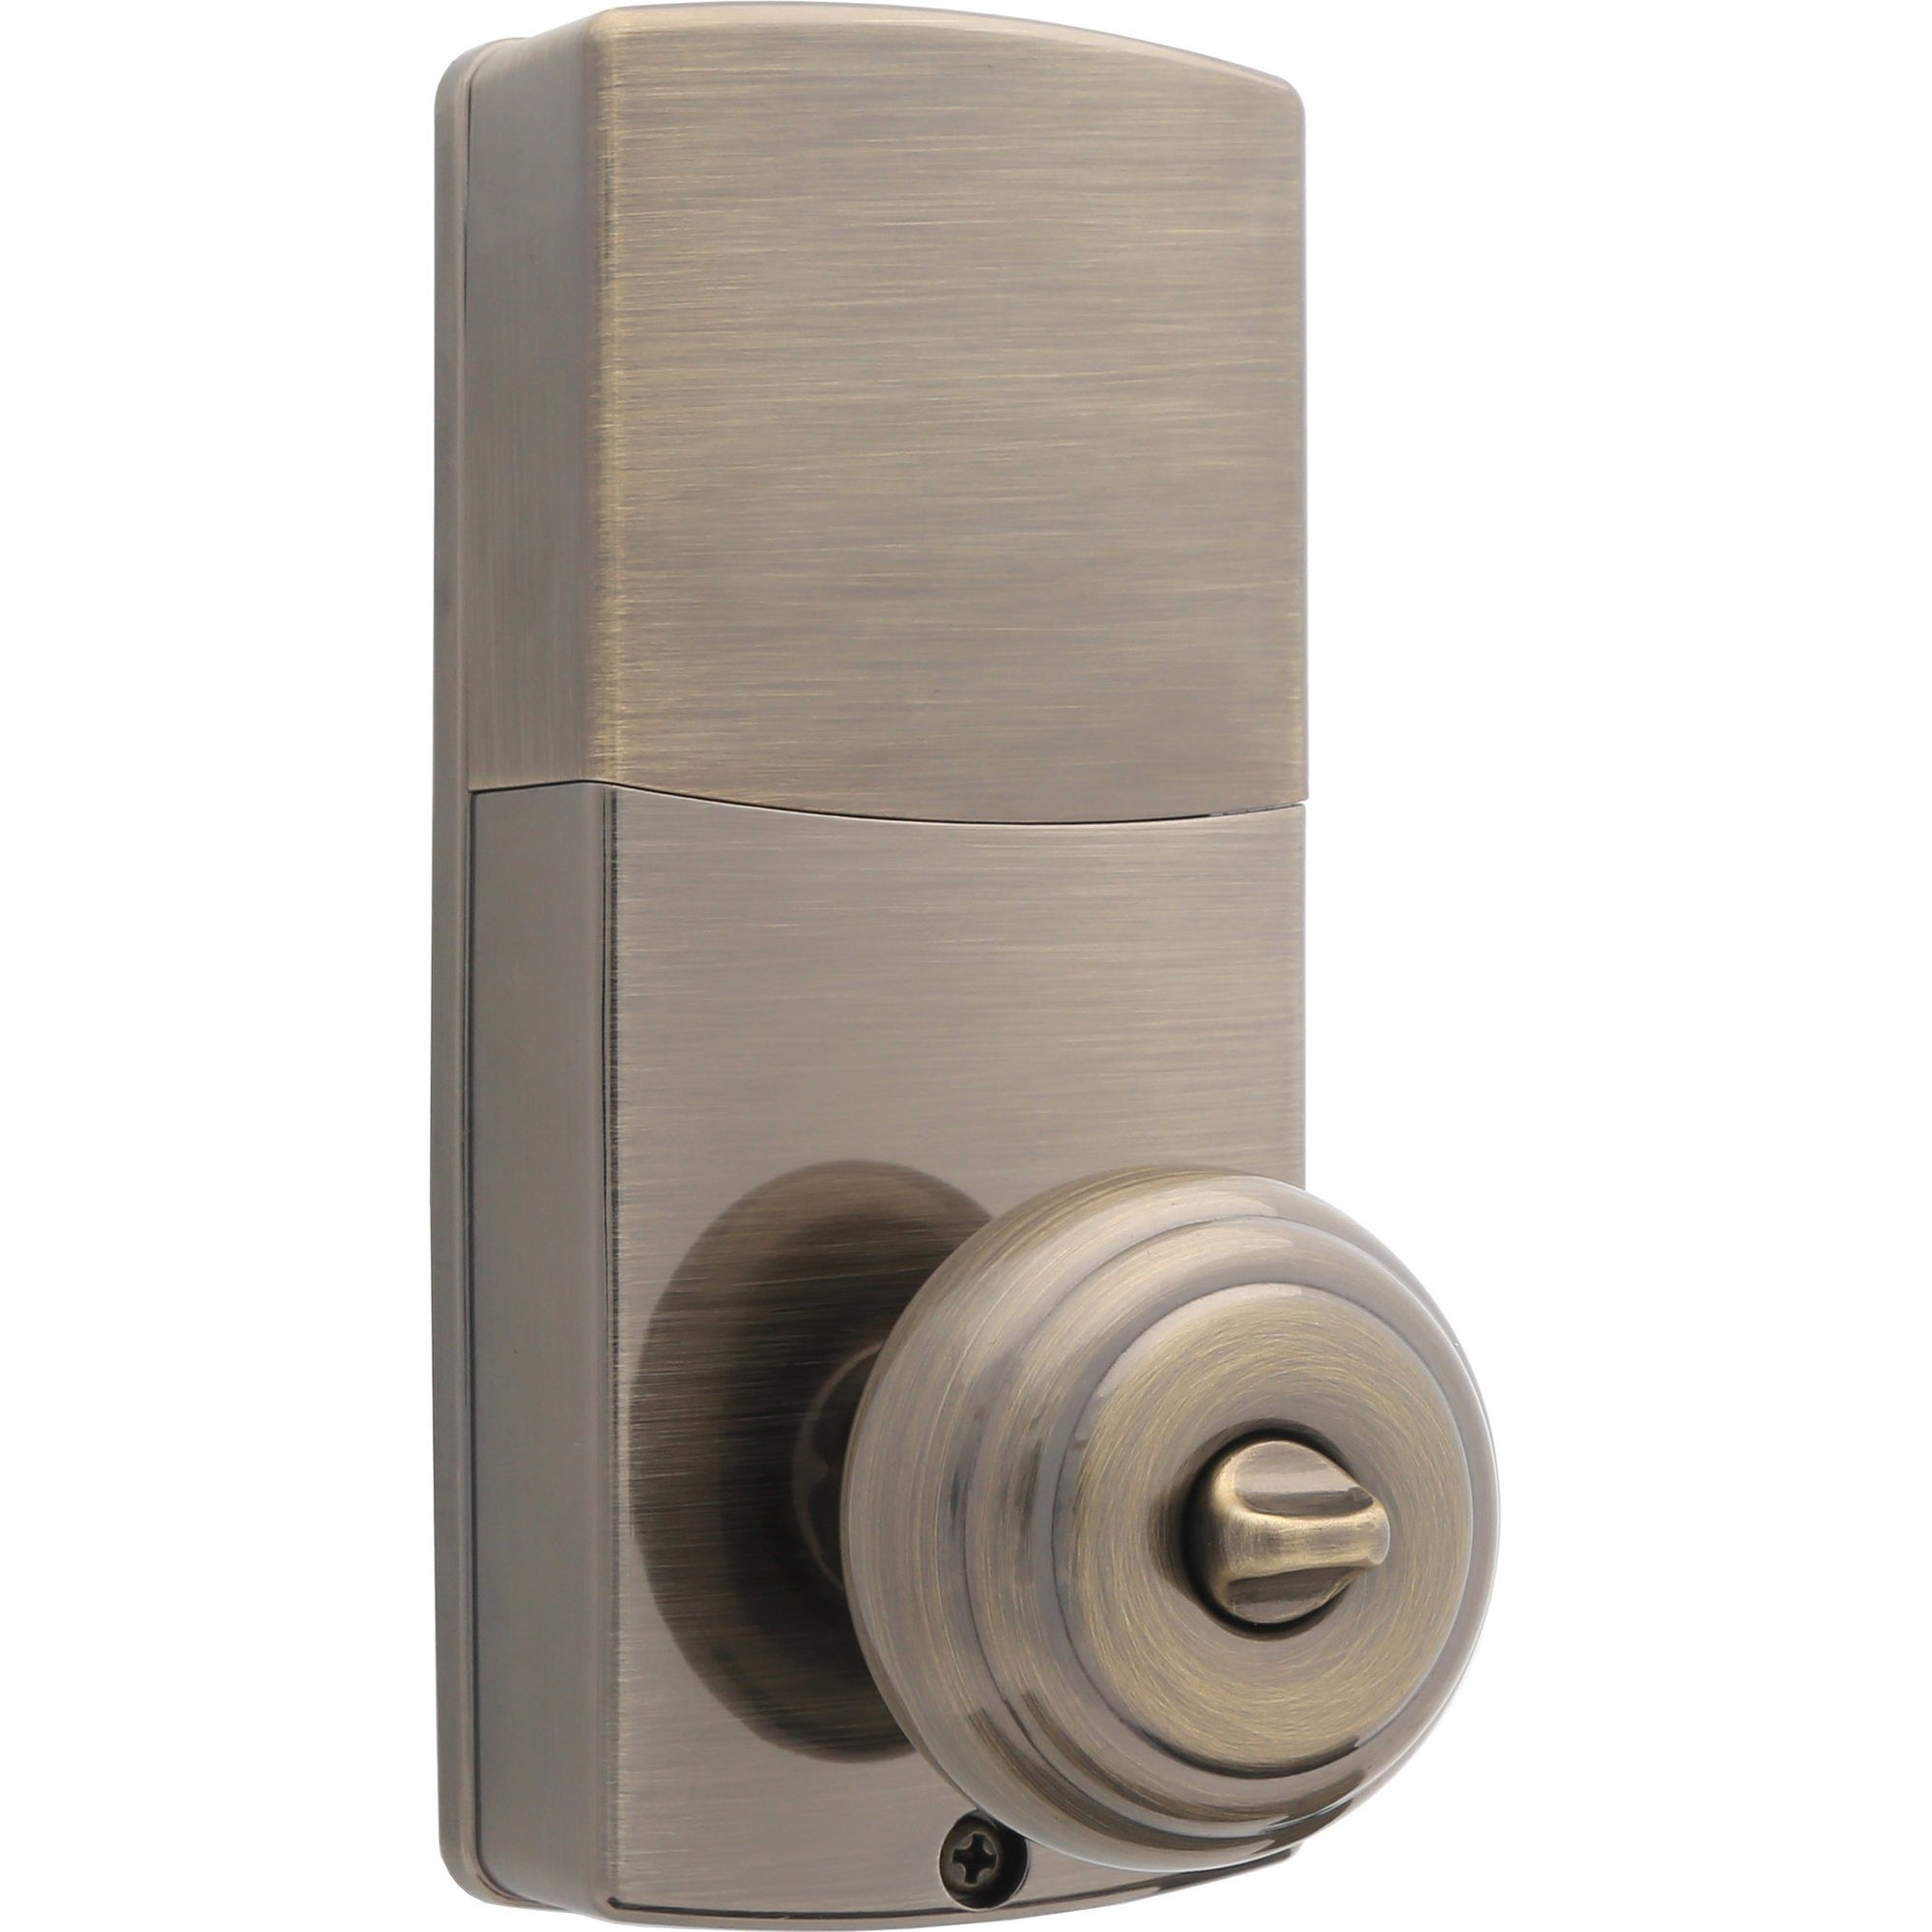 Honeywell 8732101 Electronic Entry Knob Door Lock with Keypad Antique Brass Finish